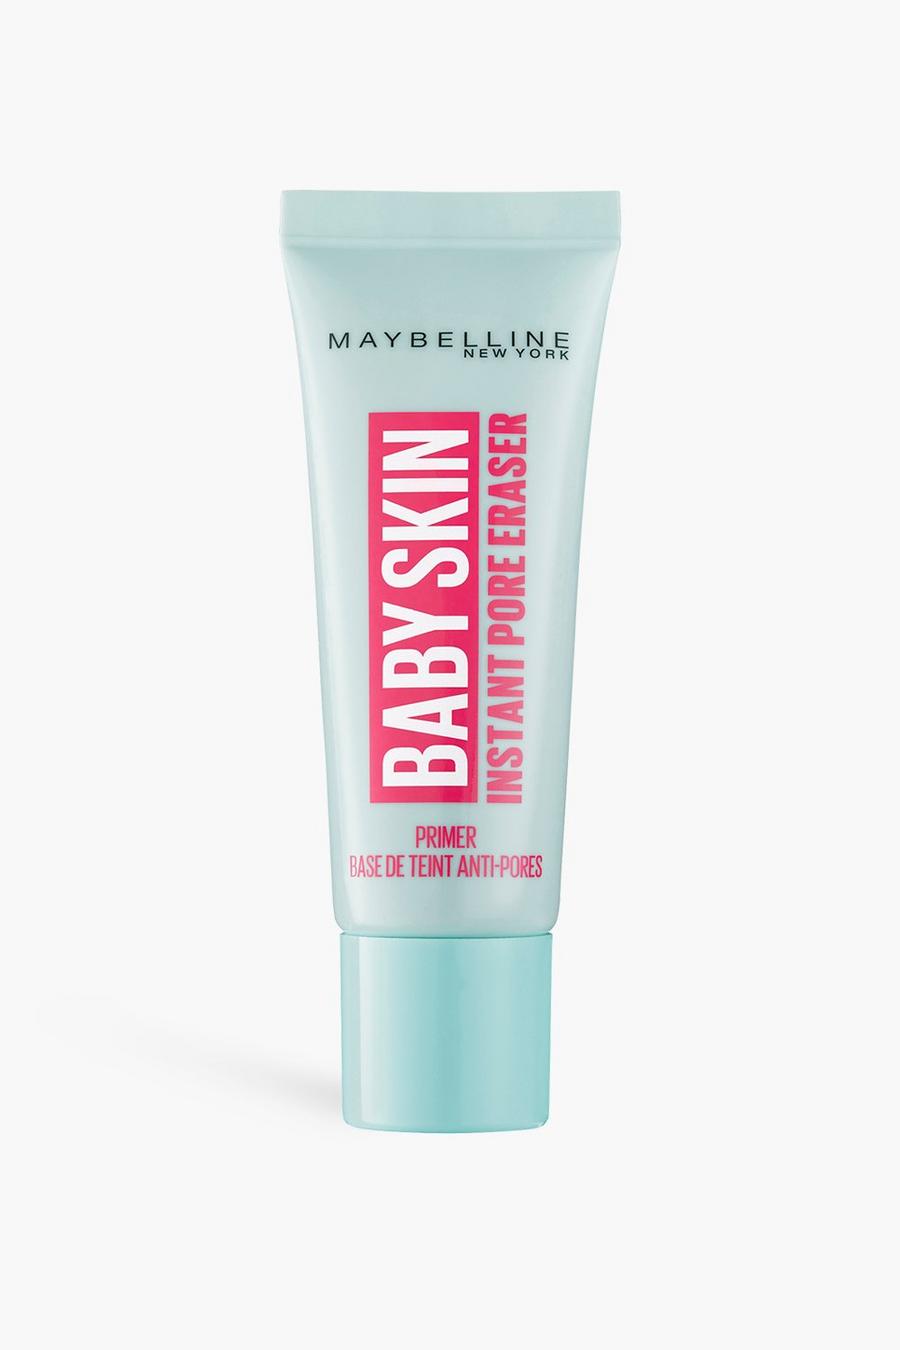 Maybelline - Base de teint anti pores - 22ml, Couleur chair nude